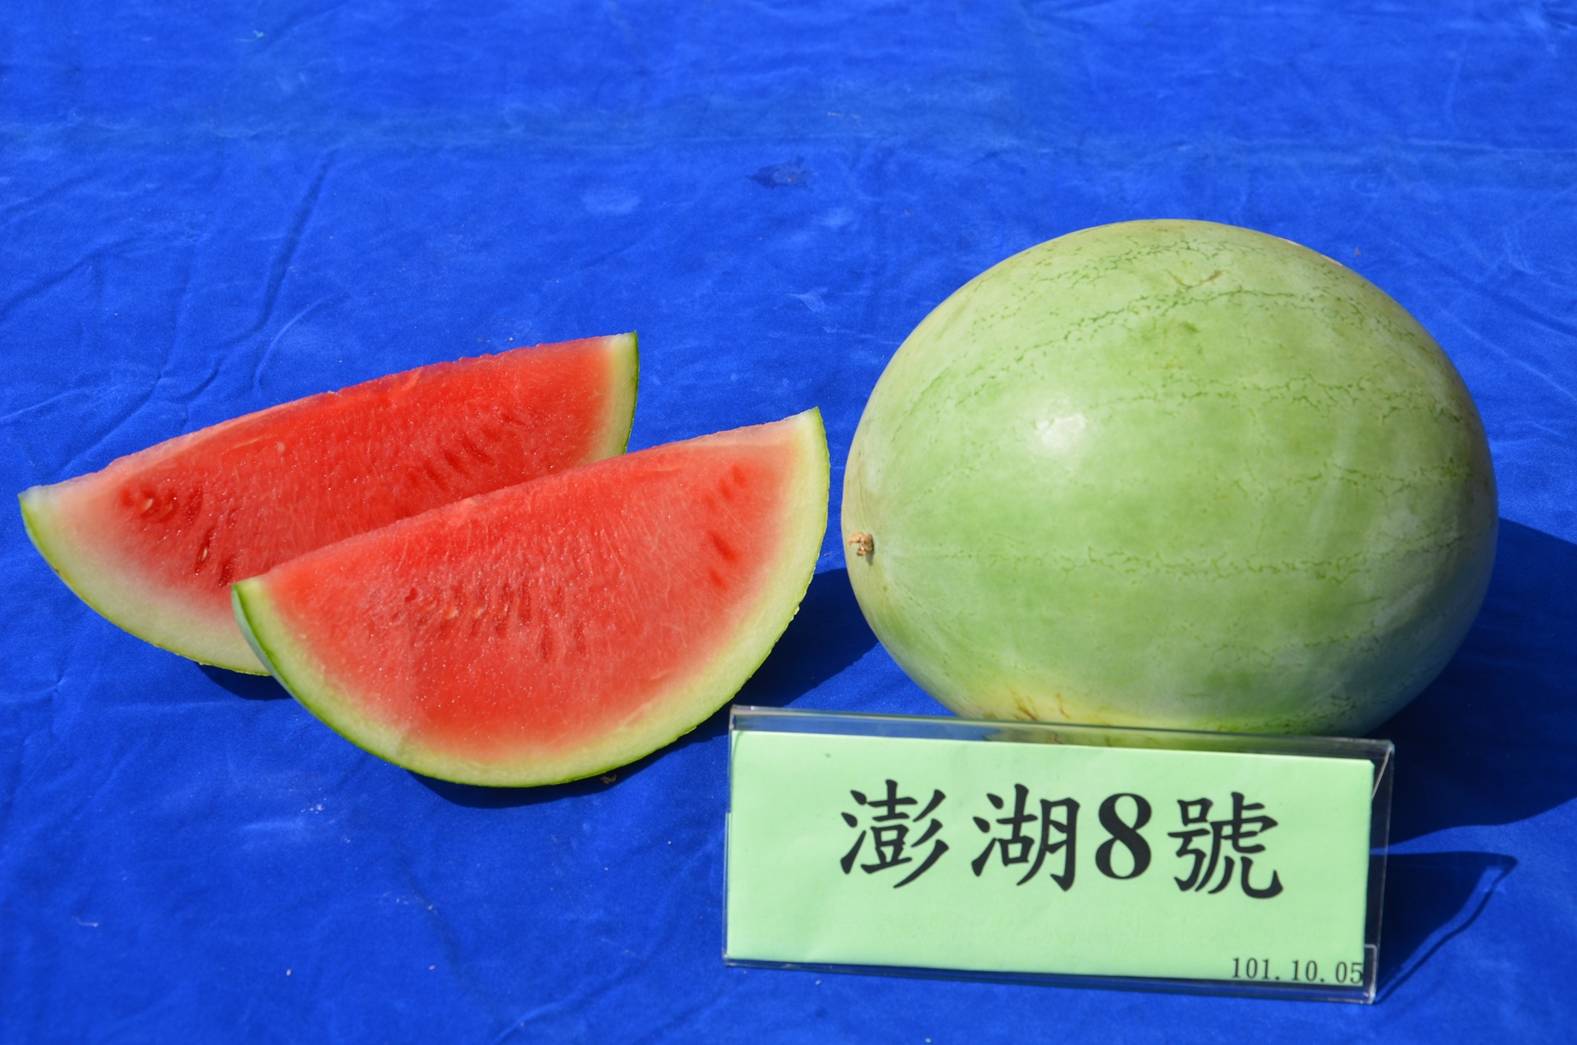 Watermelon Penghu 8